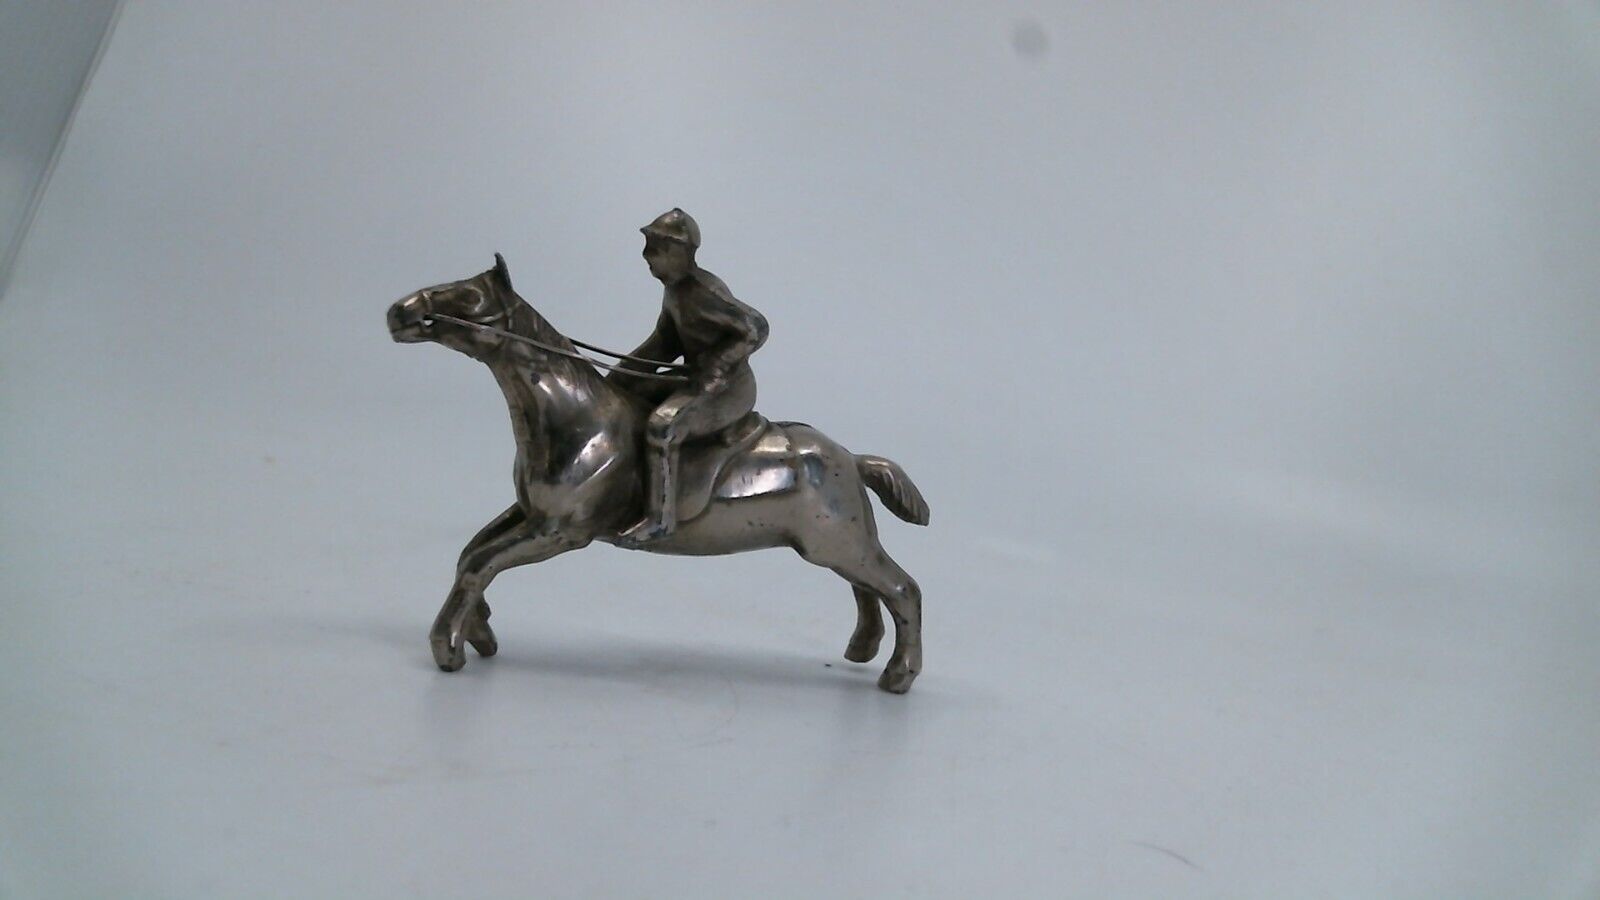 Vintage Toy Jockey on Horse